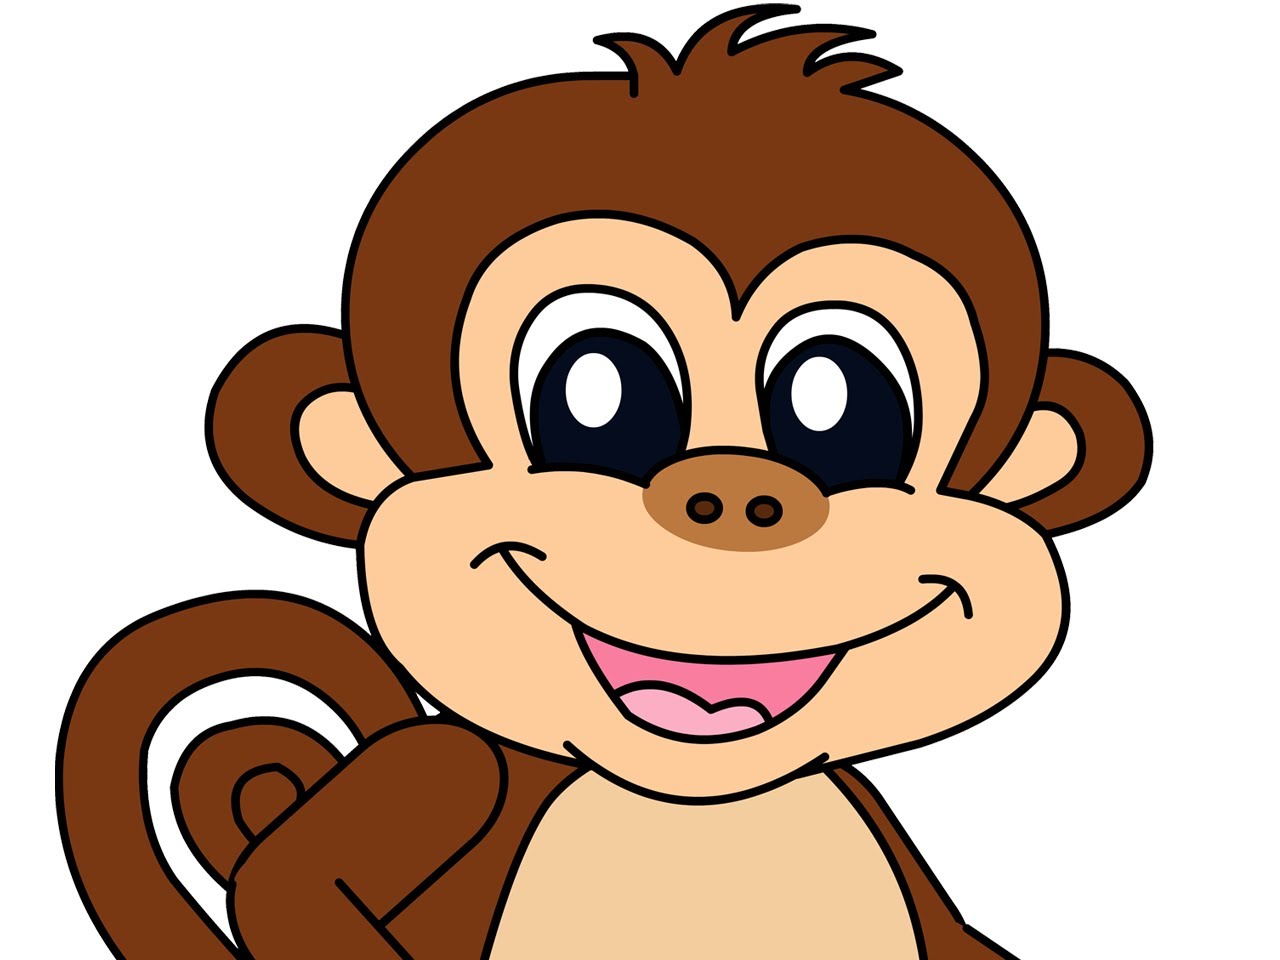 Free Cartoon Monkey Head, Download Free Cartoon Monkey Head png images